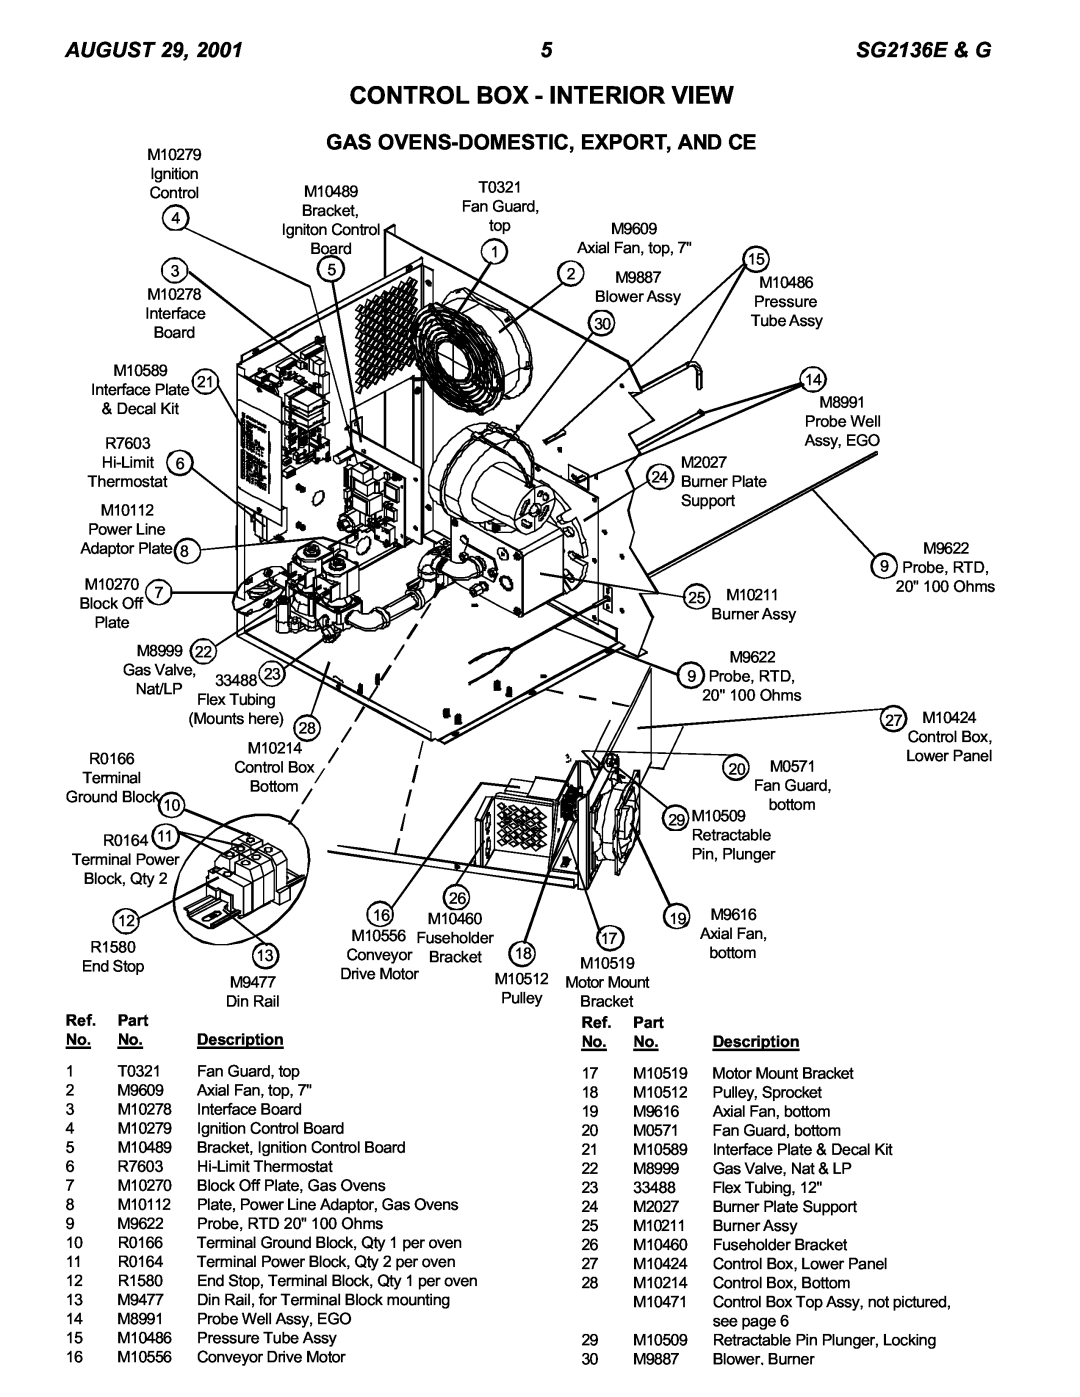 Blodgett SG2136 E & G manual Gas Ovens-Domestic, Export, And Ce, Part, Description 